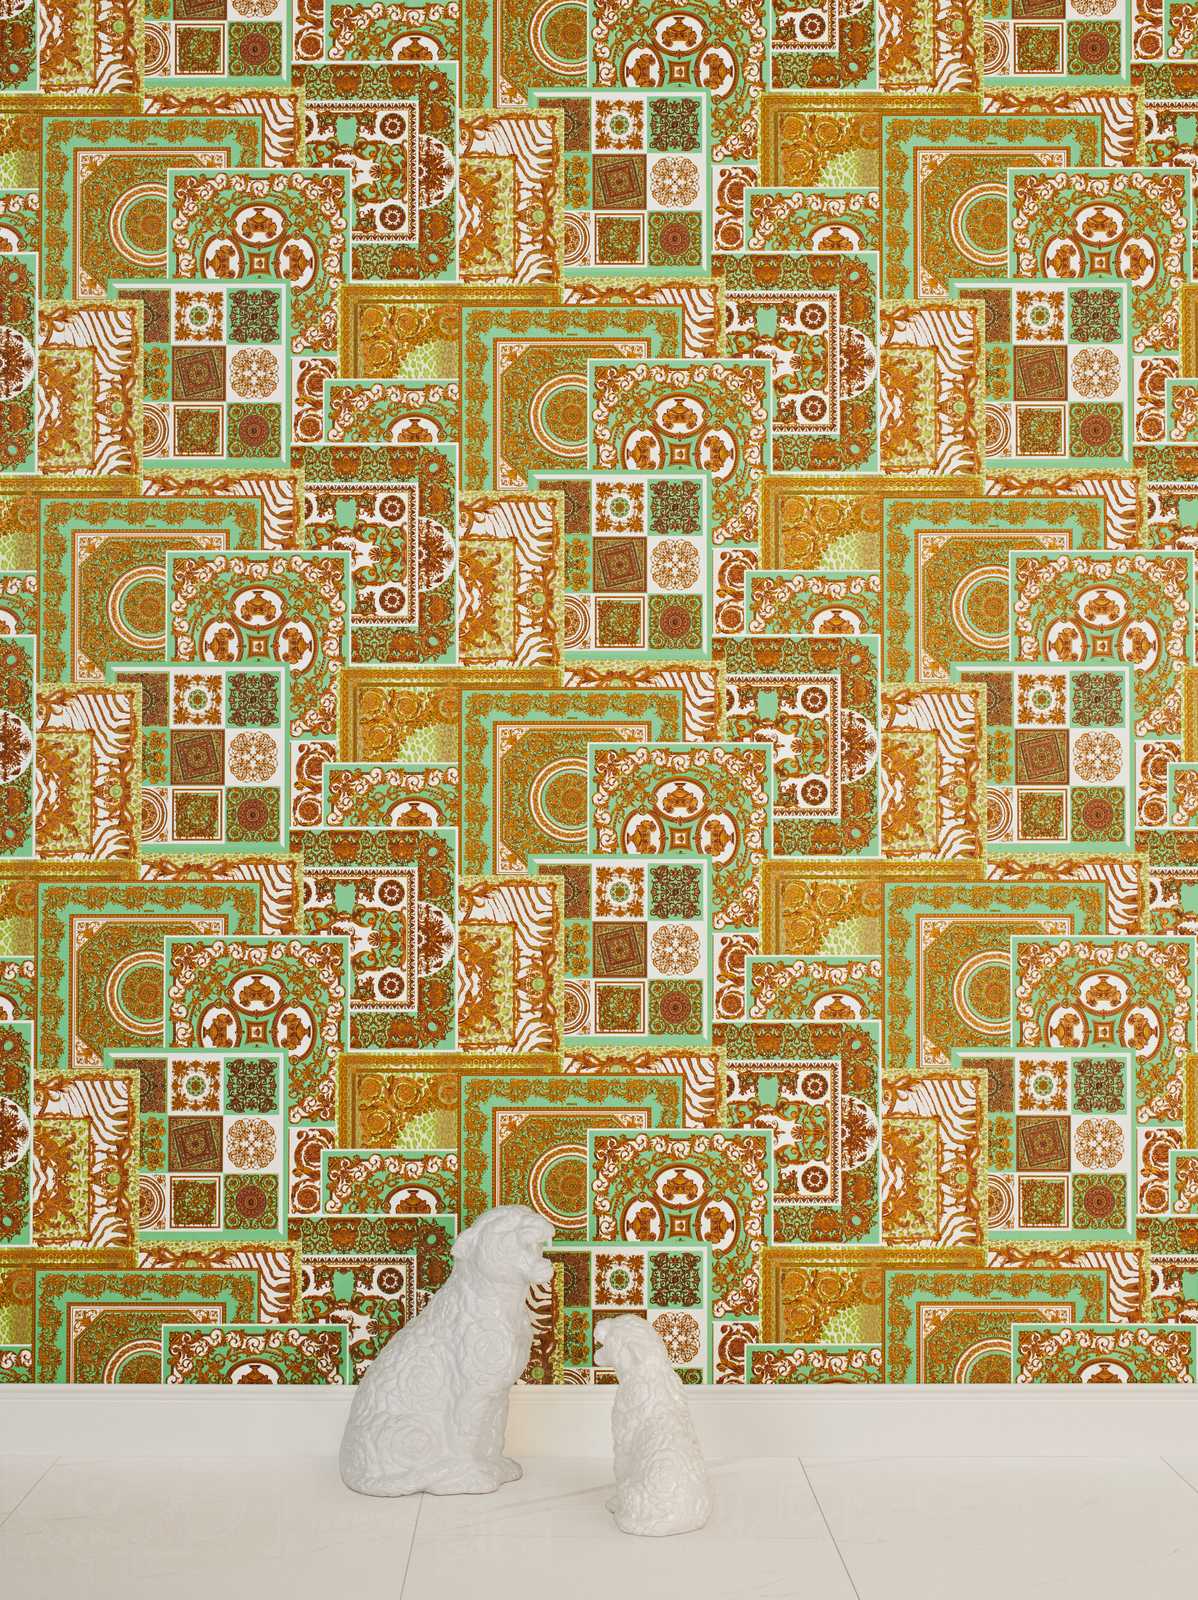             VERSACE Home wallpaper baroque details & animal print - gold, green, brown
        